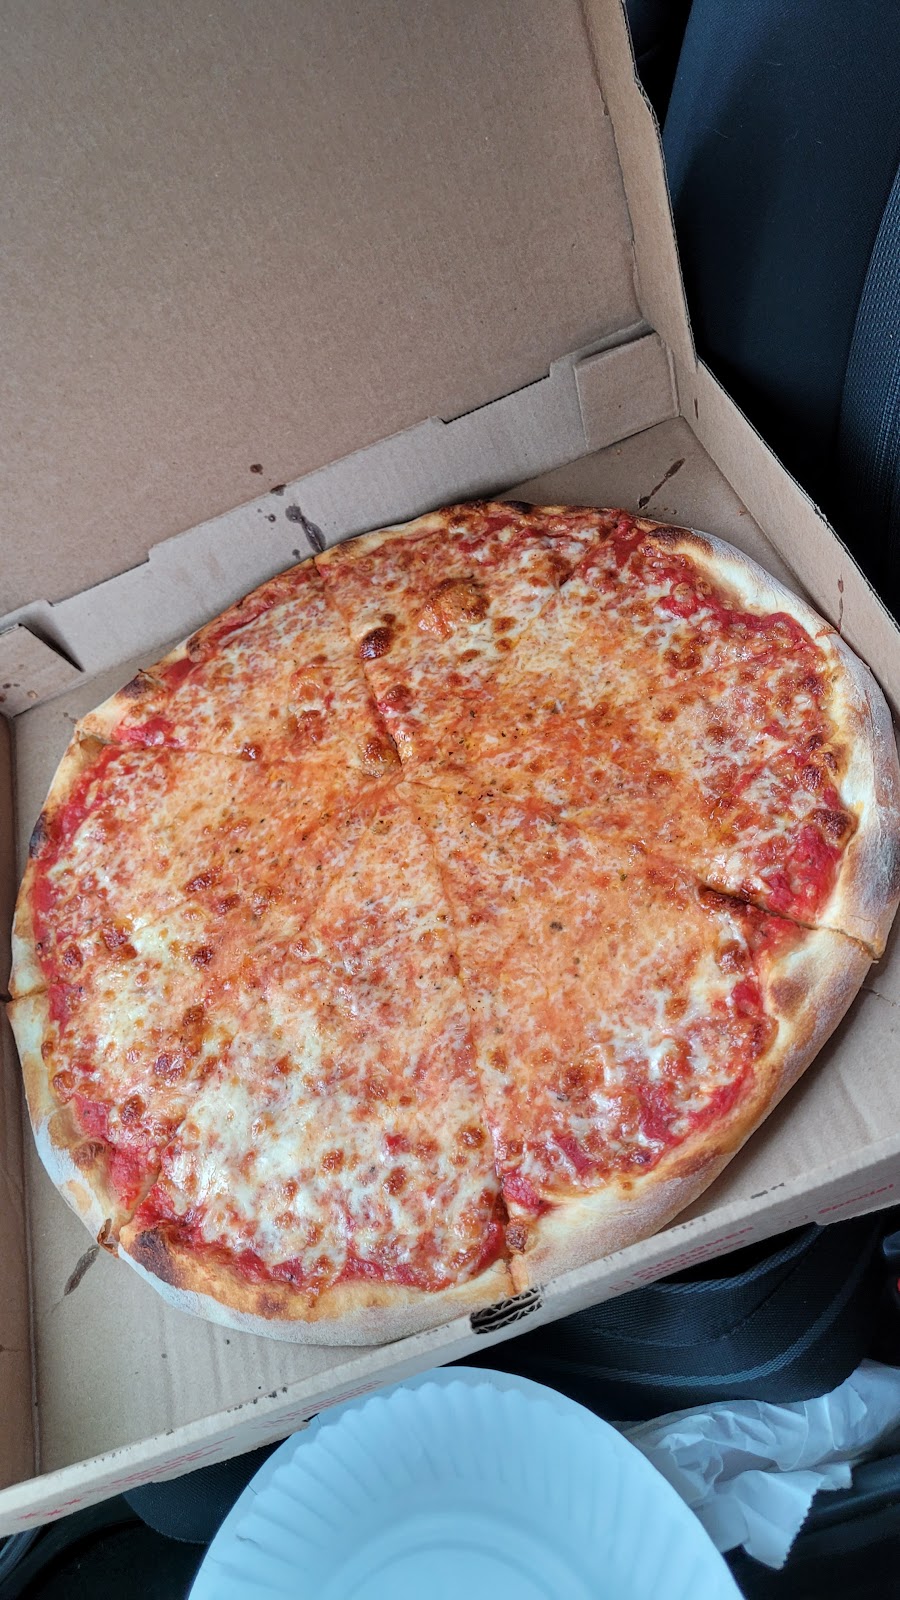 Tonys Pizza Delight | 1331 Magie Ave, Union, NJ 07083 | Phone: (908) 402-7287